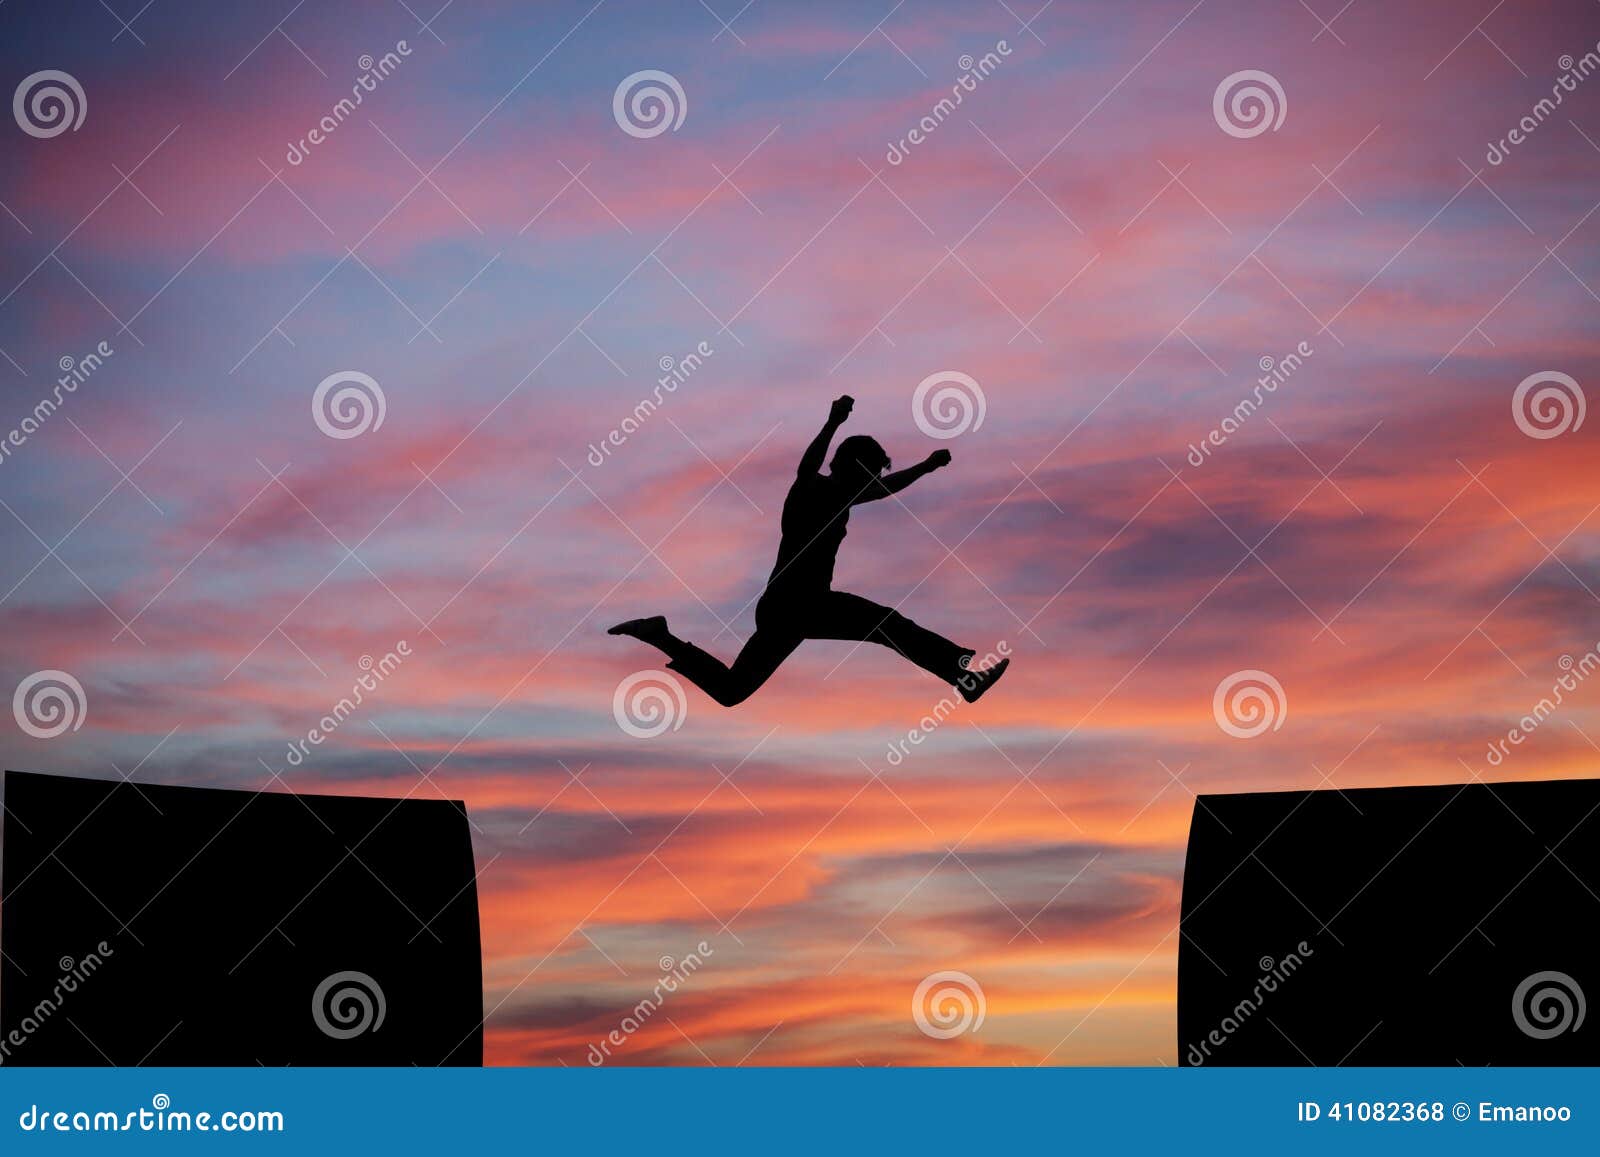 man jumping a gap in sunset sky